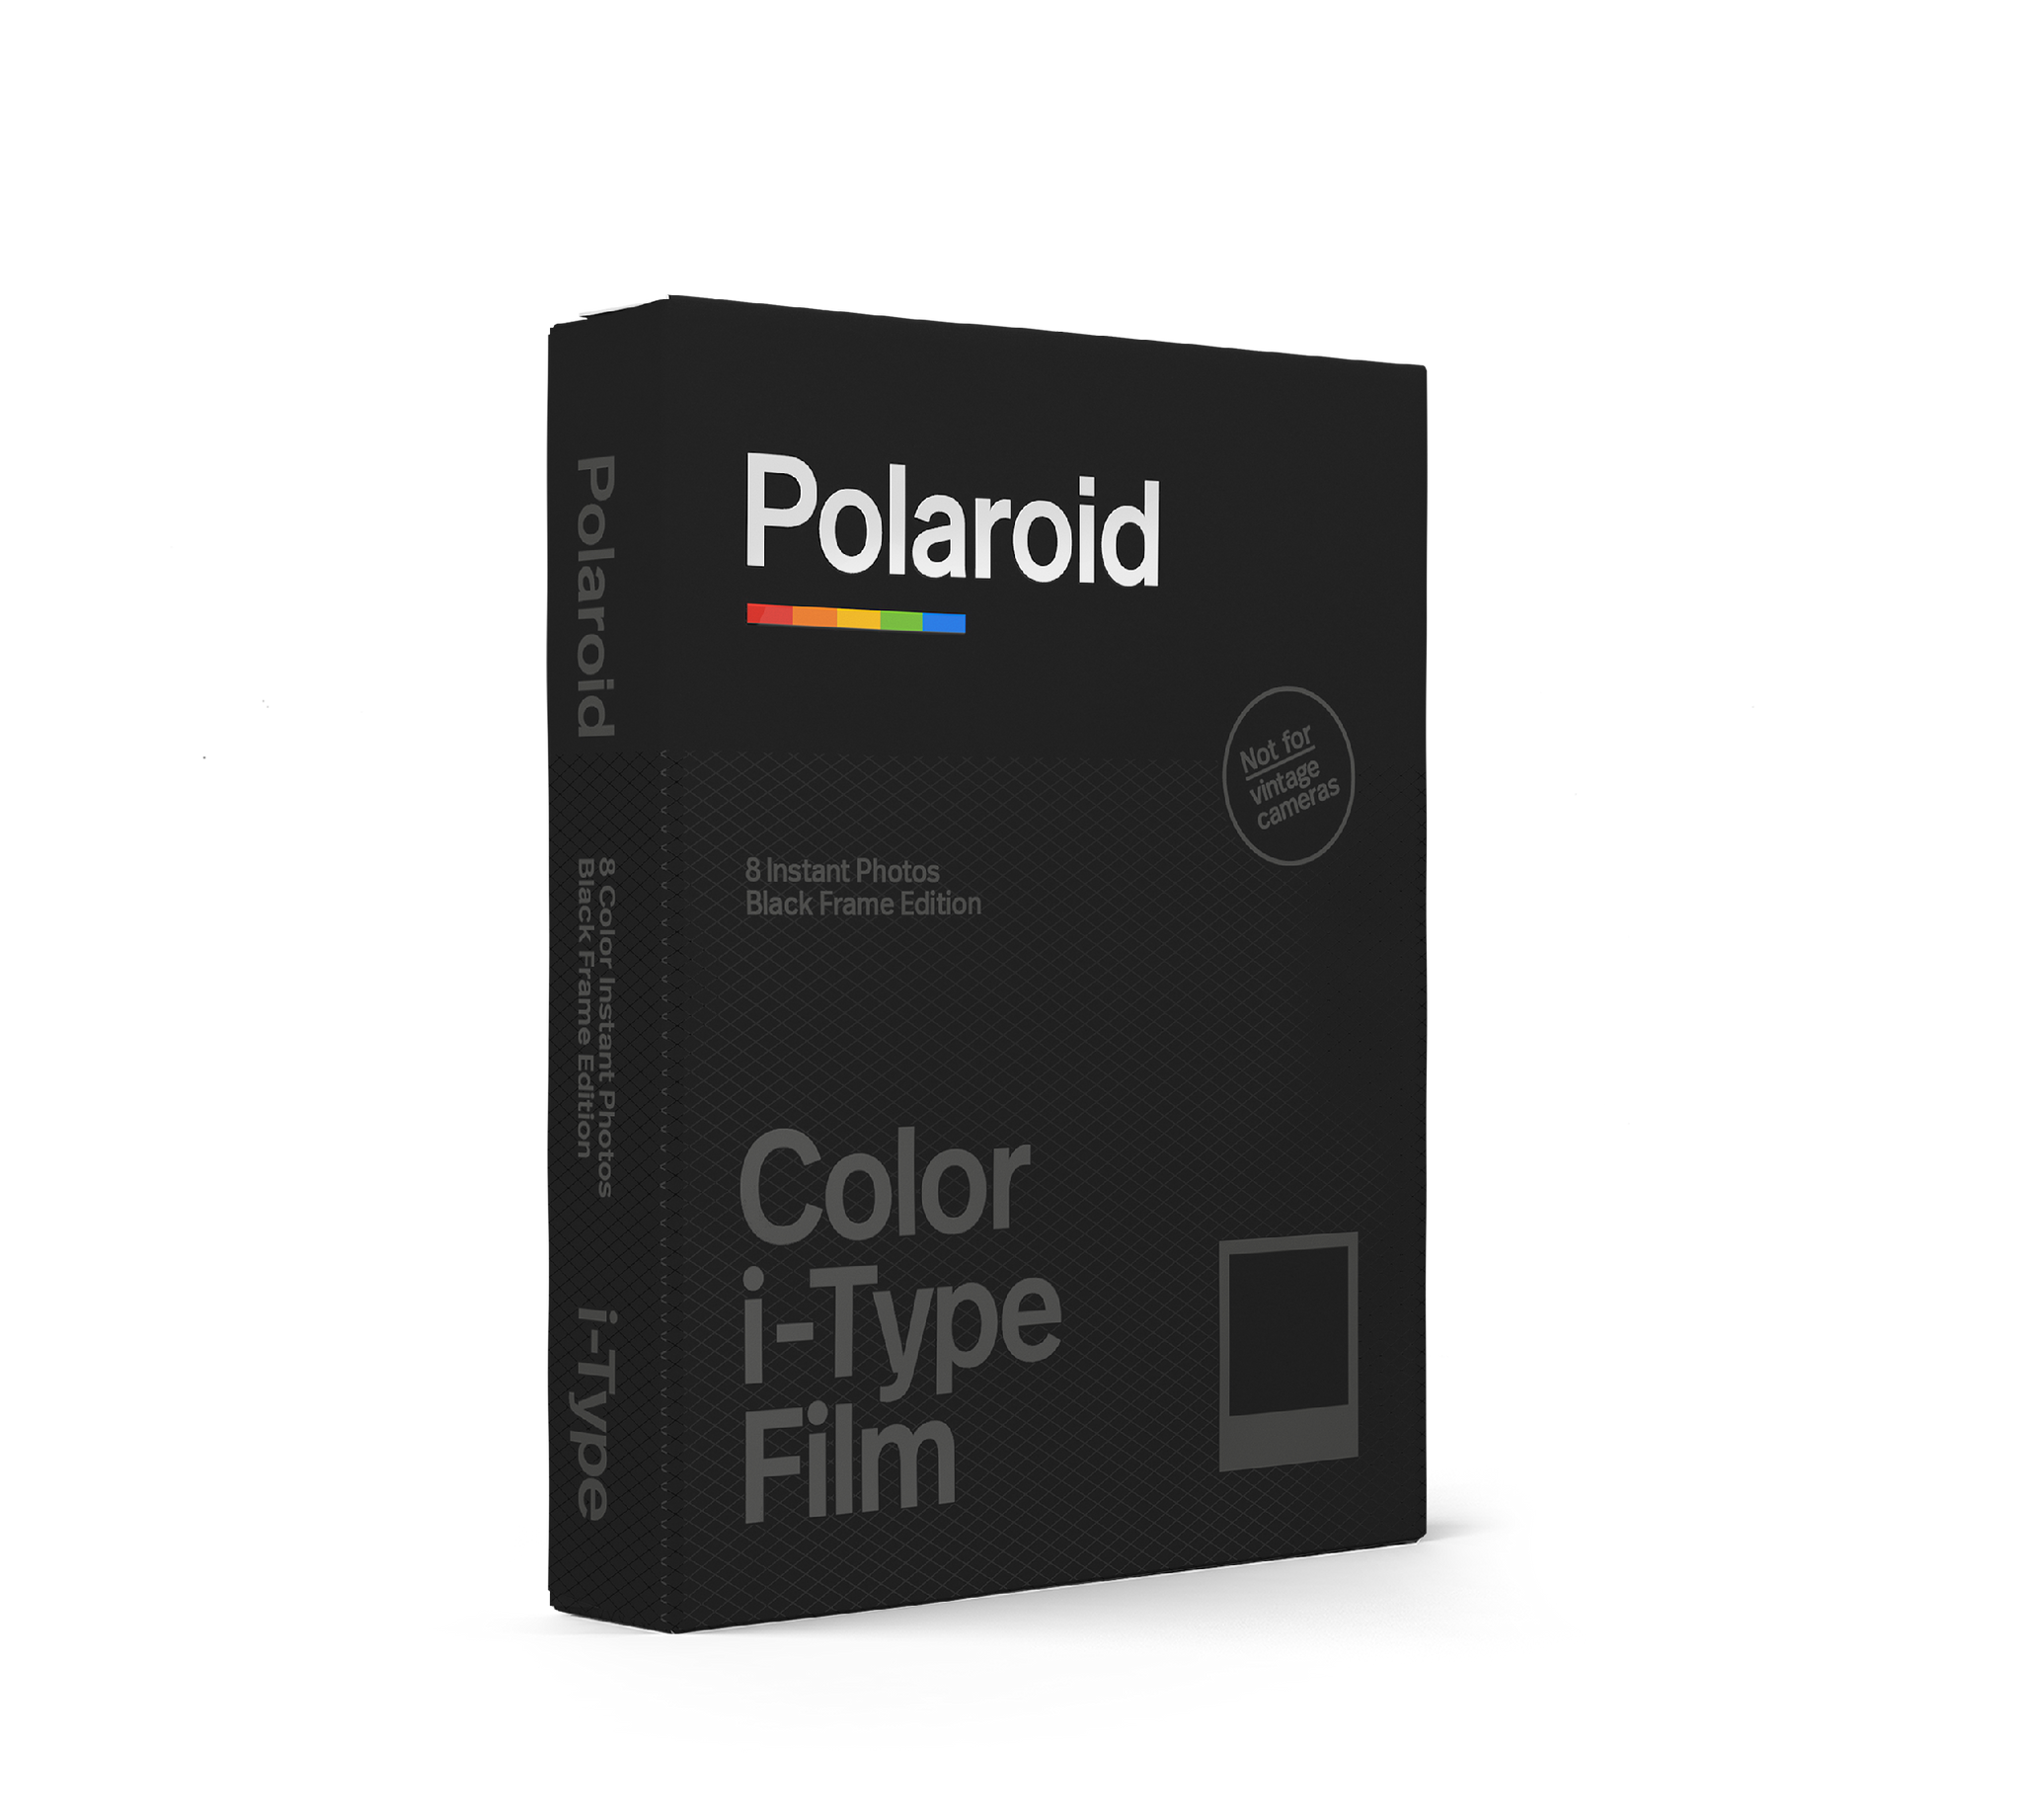 Polaroid Color i-Type Film 黑框 (6019)